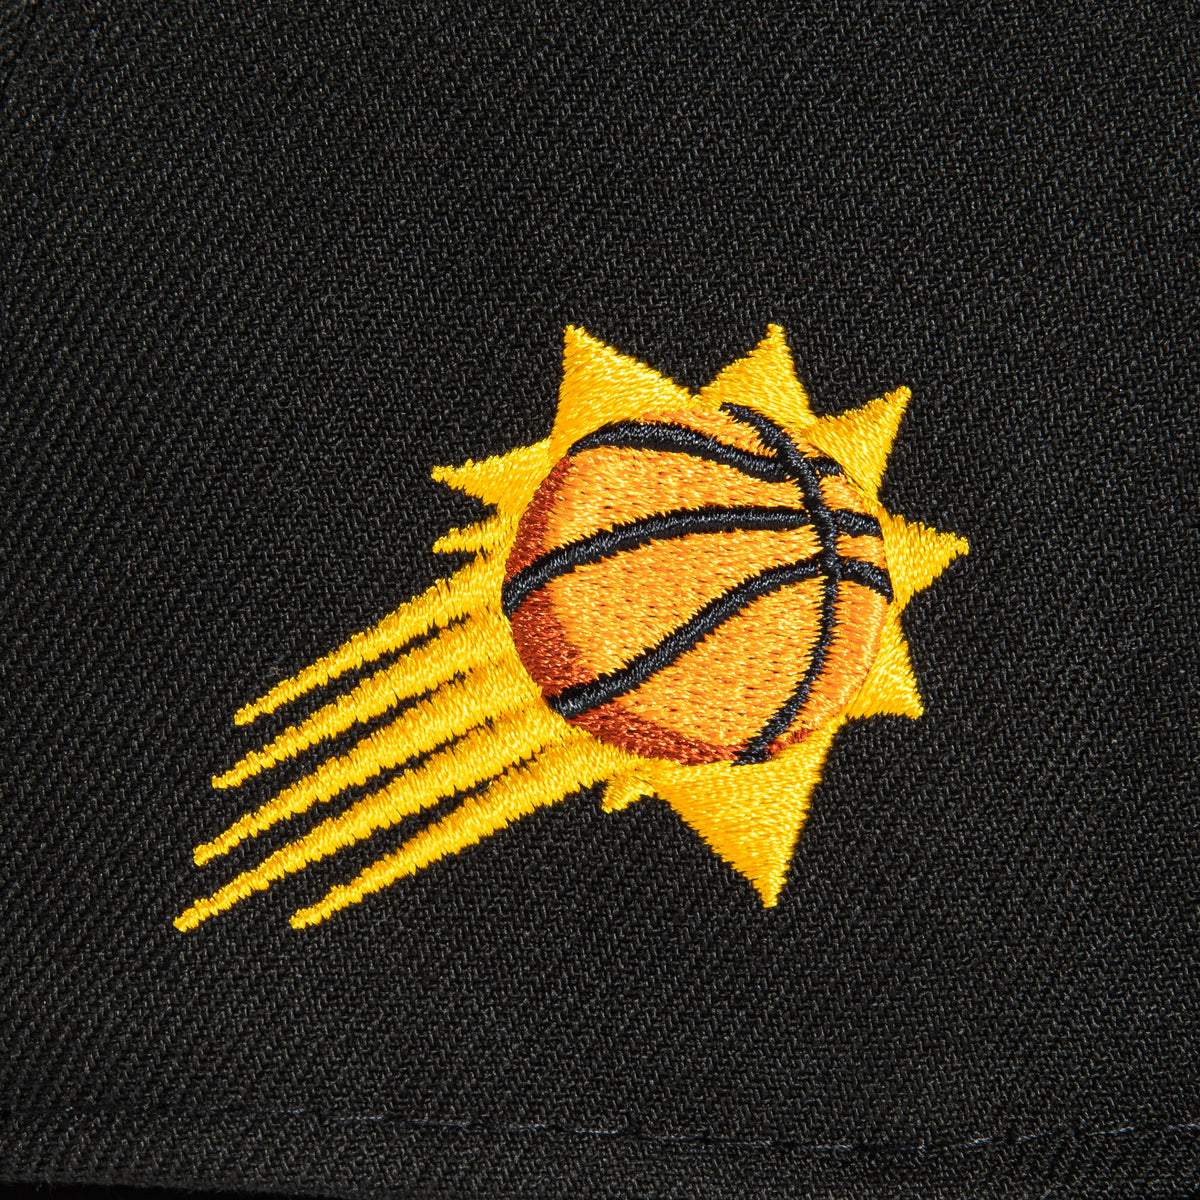 New Era 59Fifty Phoenix Suns Burst Hat - Black